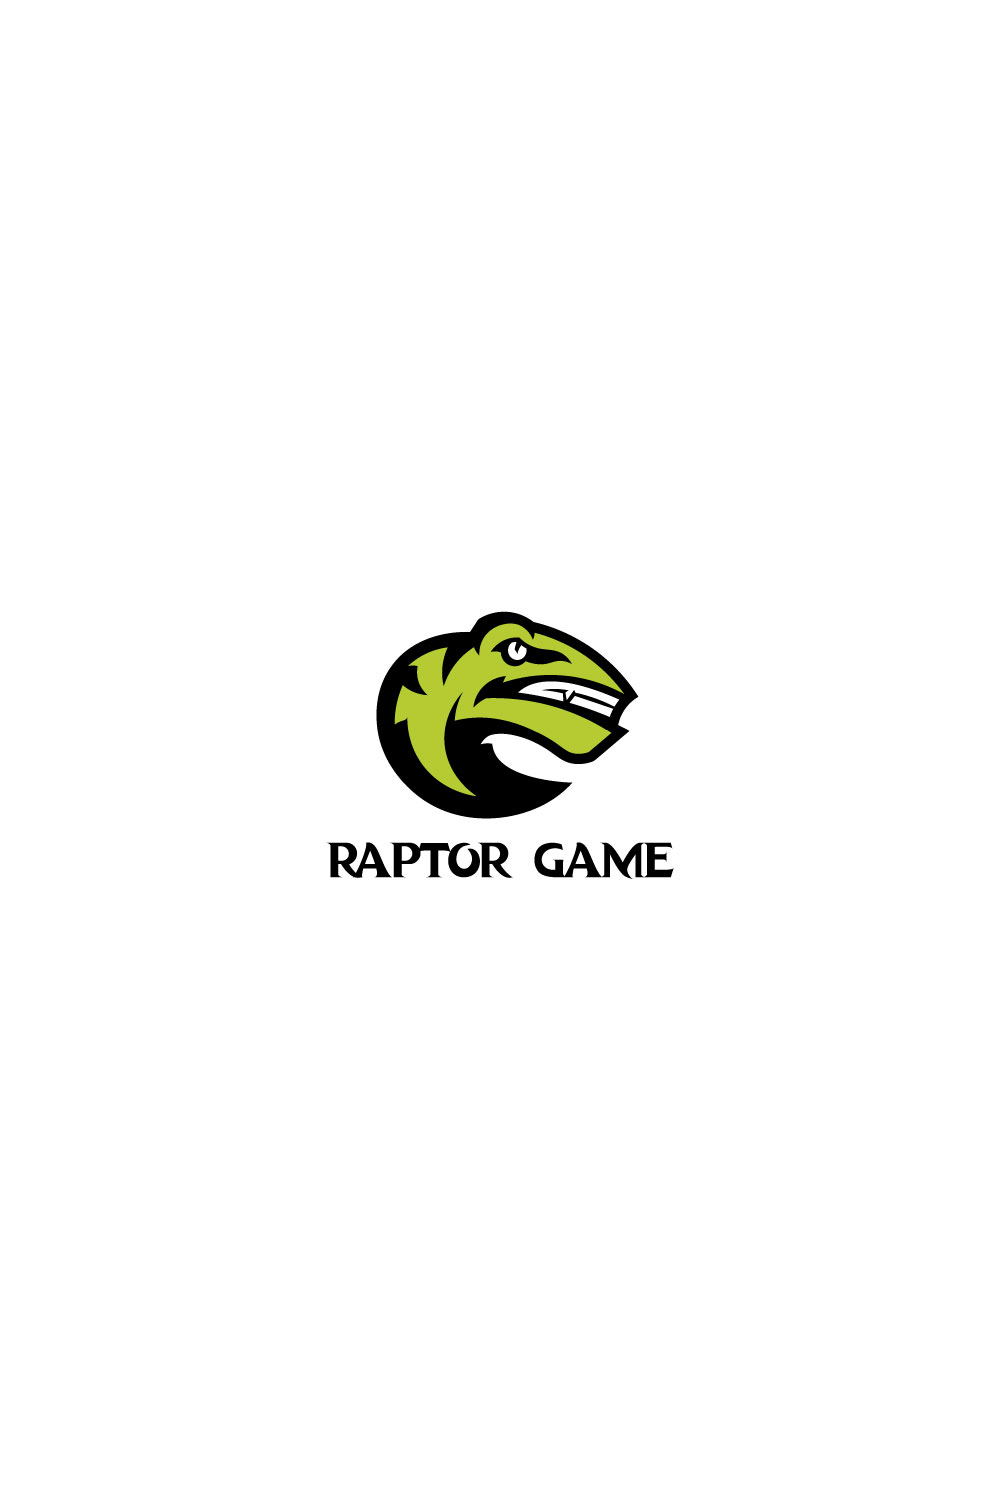 Raptor game Logo pinterest preview image.